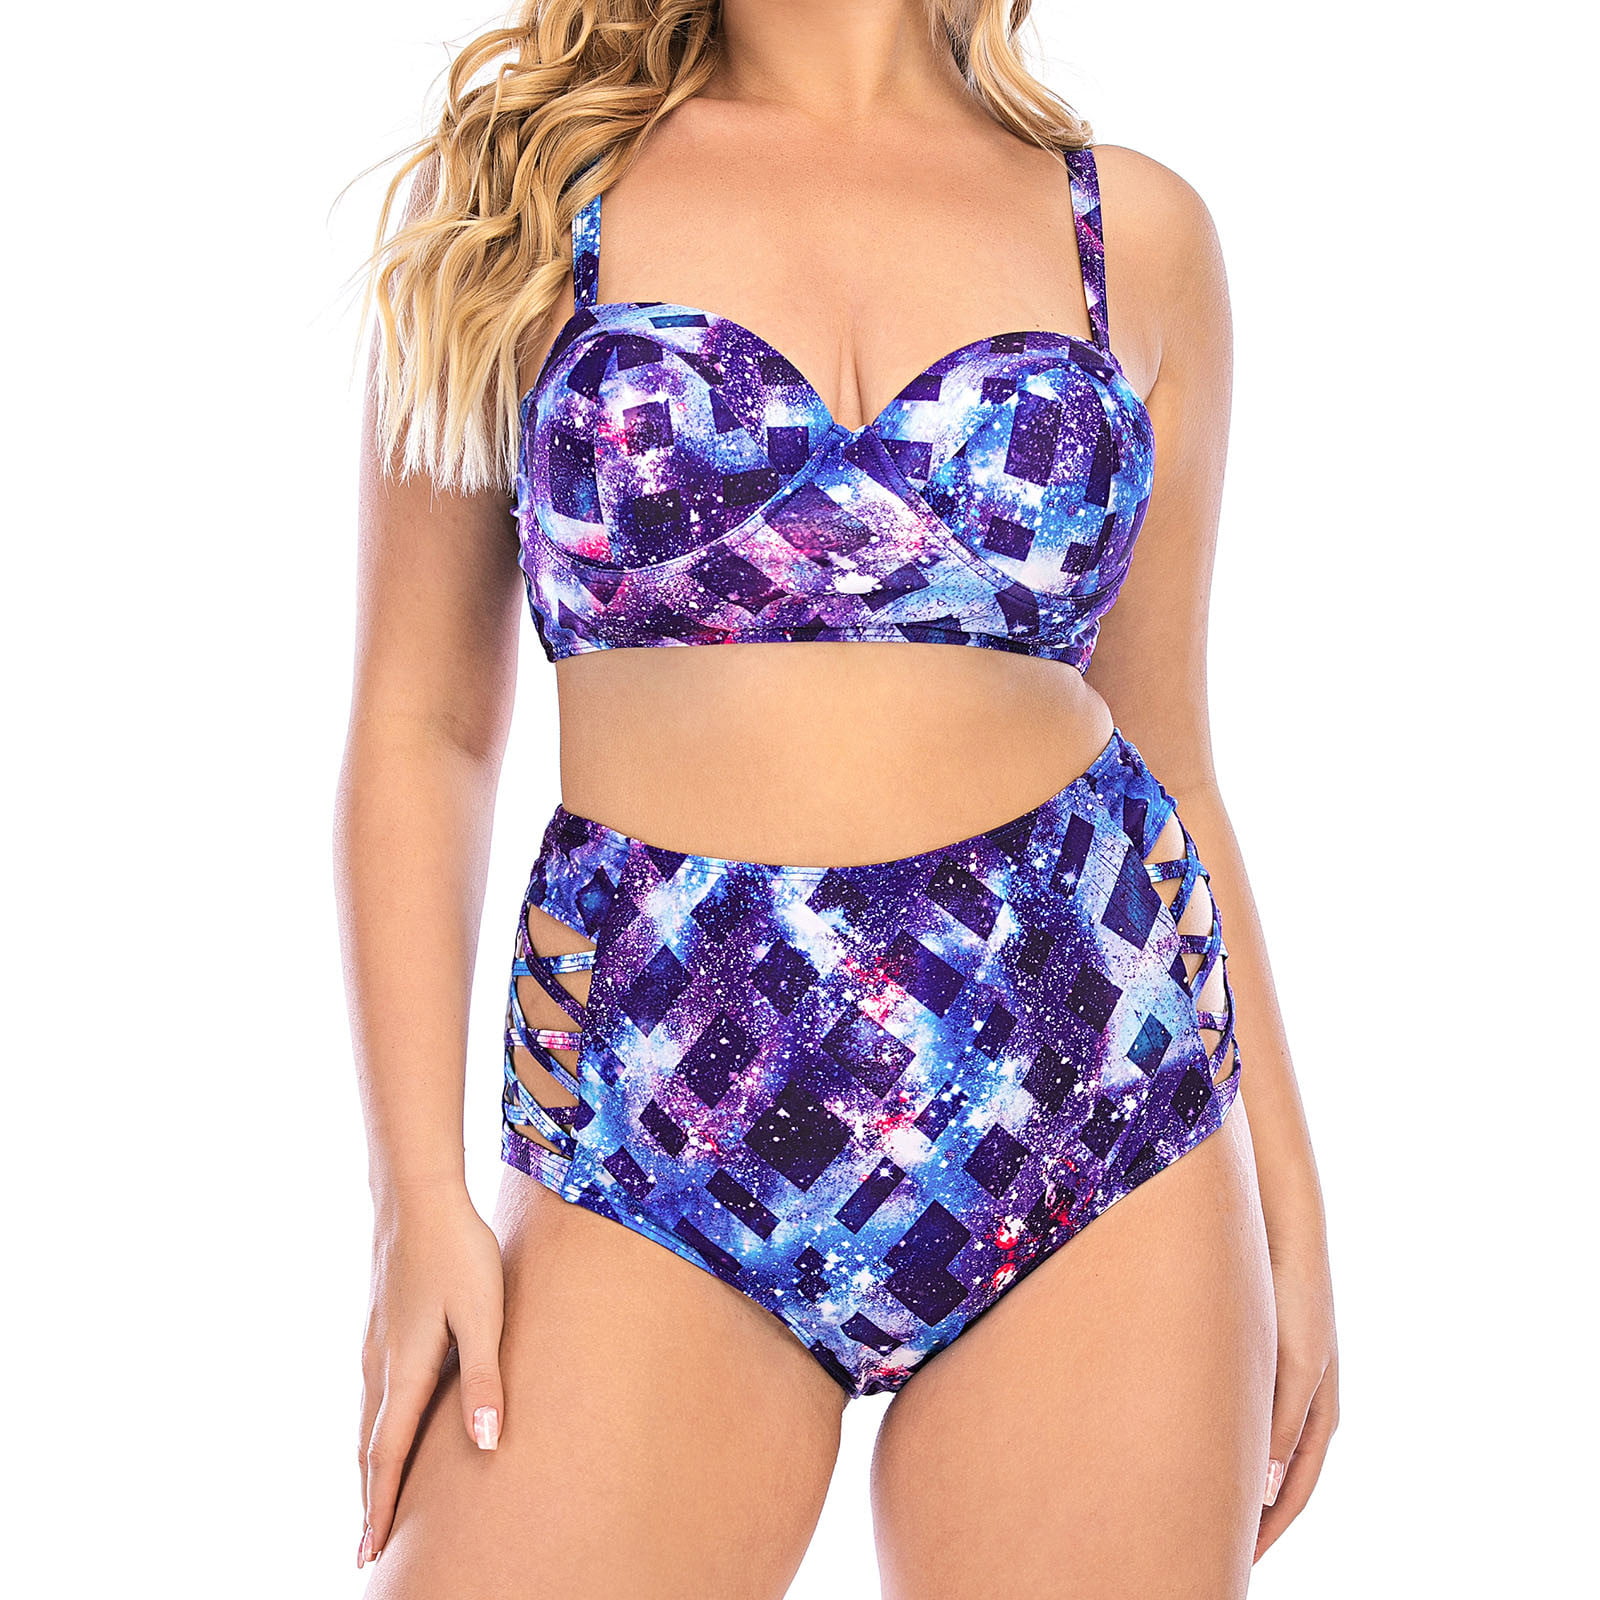 ZQGJB Plus Size Swimsuit for Women Galaxy Print High Waist Tummy Control  Bikini Set Two-Piece Swimwear with Bandage Swim Bottoms Bathing Suits Purple,4XL  